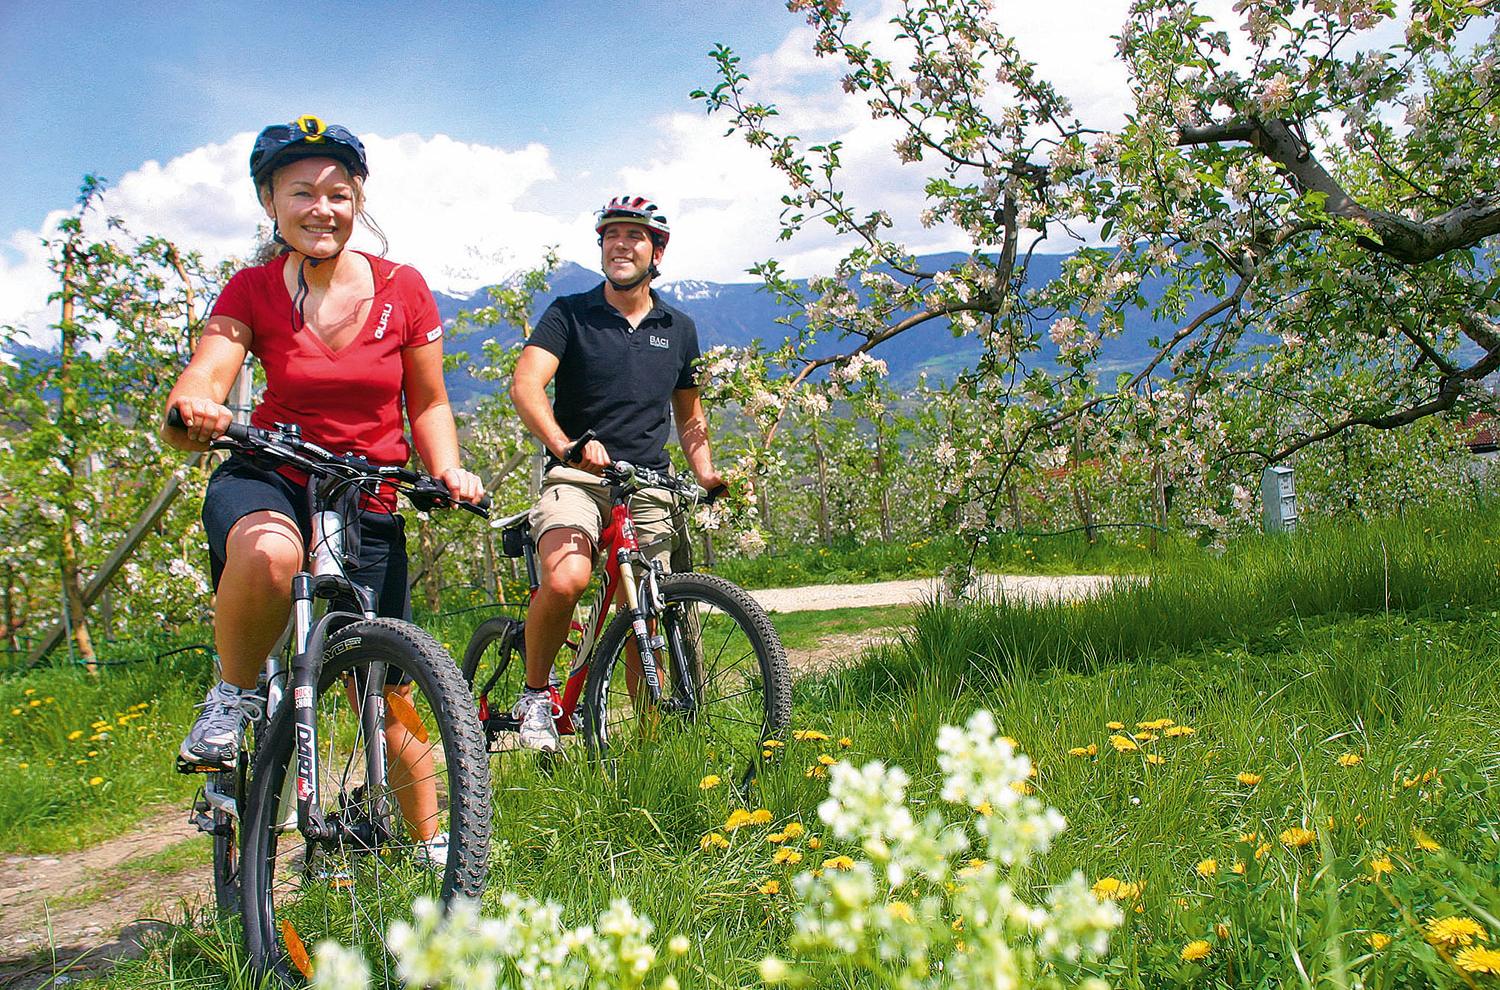 Gita in bicicletta tra gli alberi di mele in fiore a Lagundo